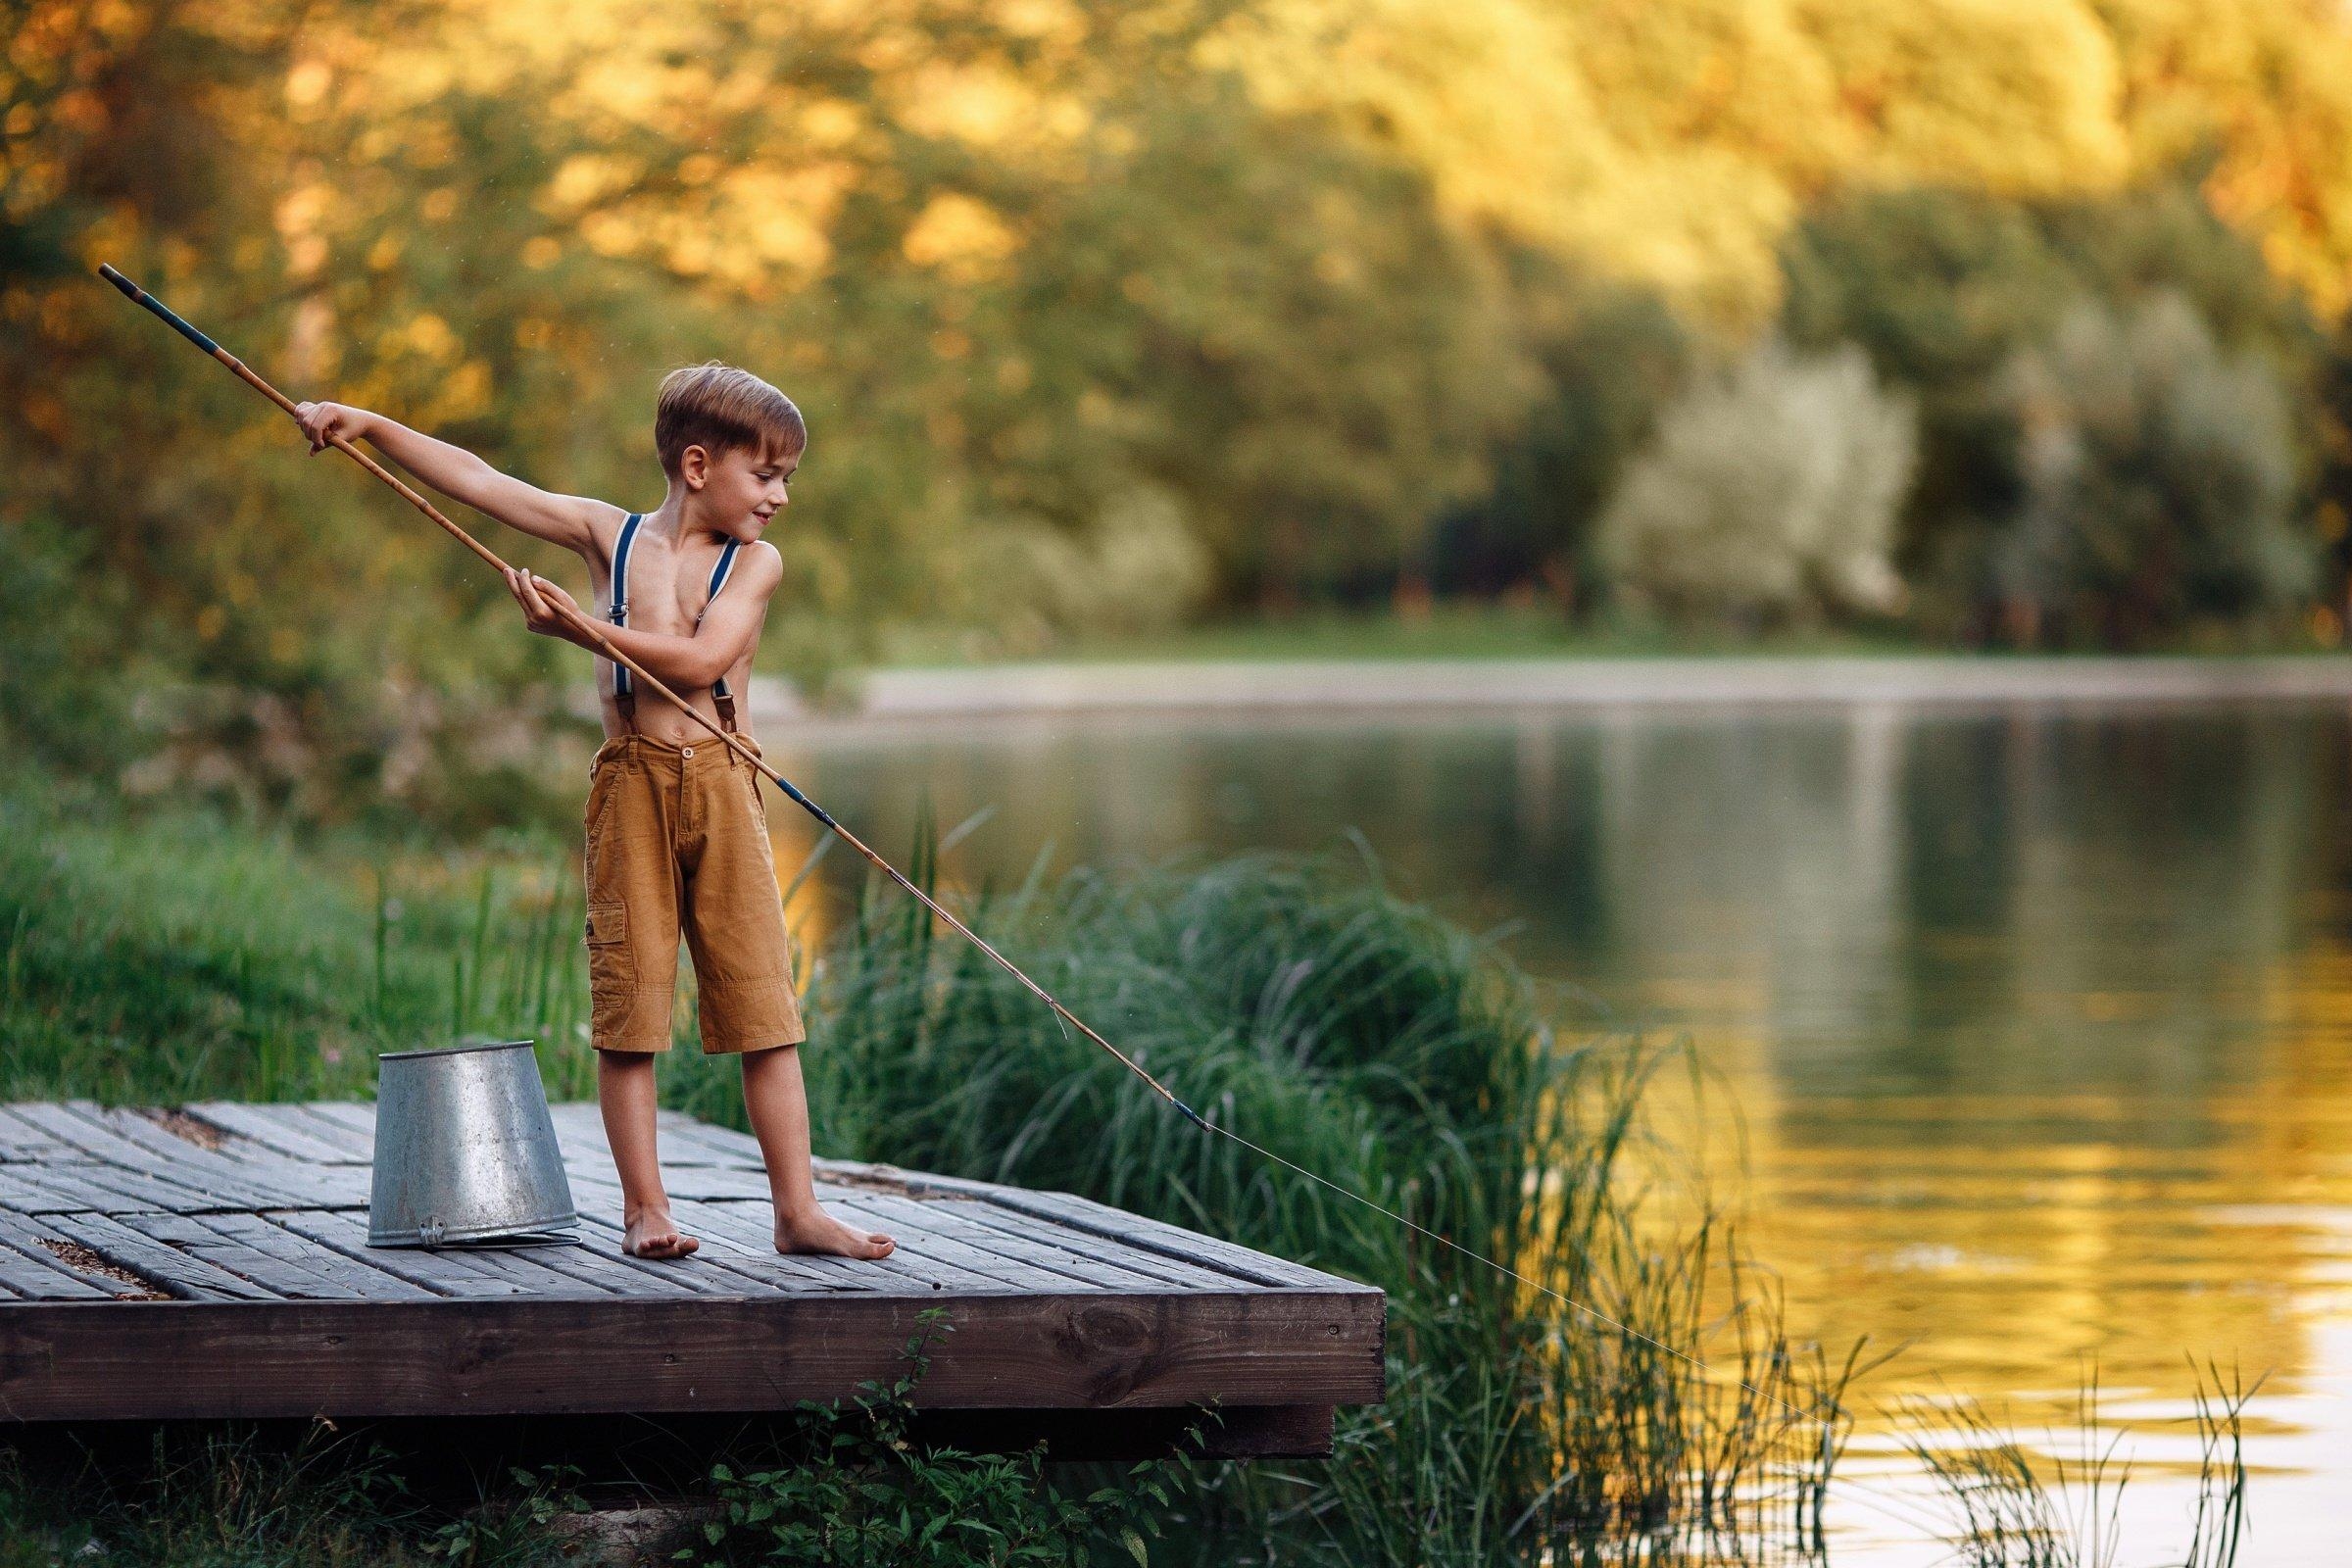 Мальчик ловил рыбу на реке. Мальчик Рыбак. Летом на речке. Мальчик с удочкой. Мальчик на природе.